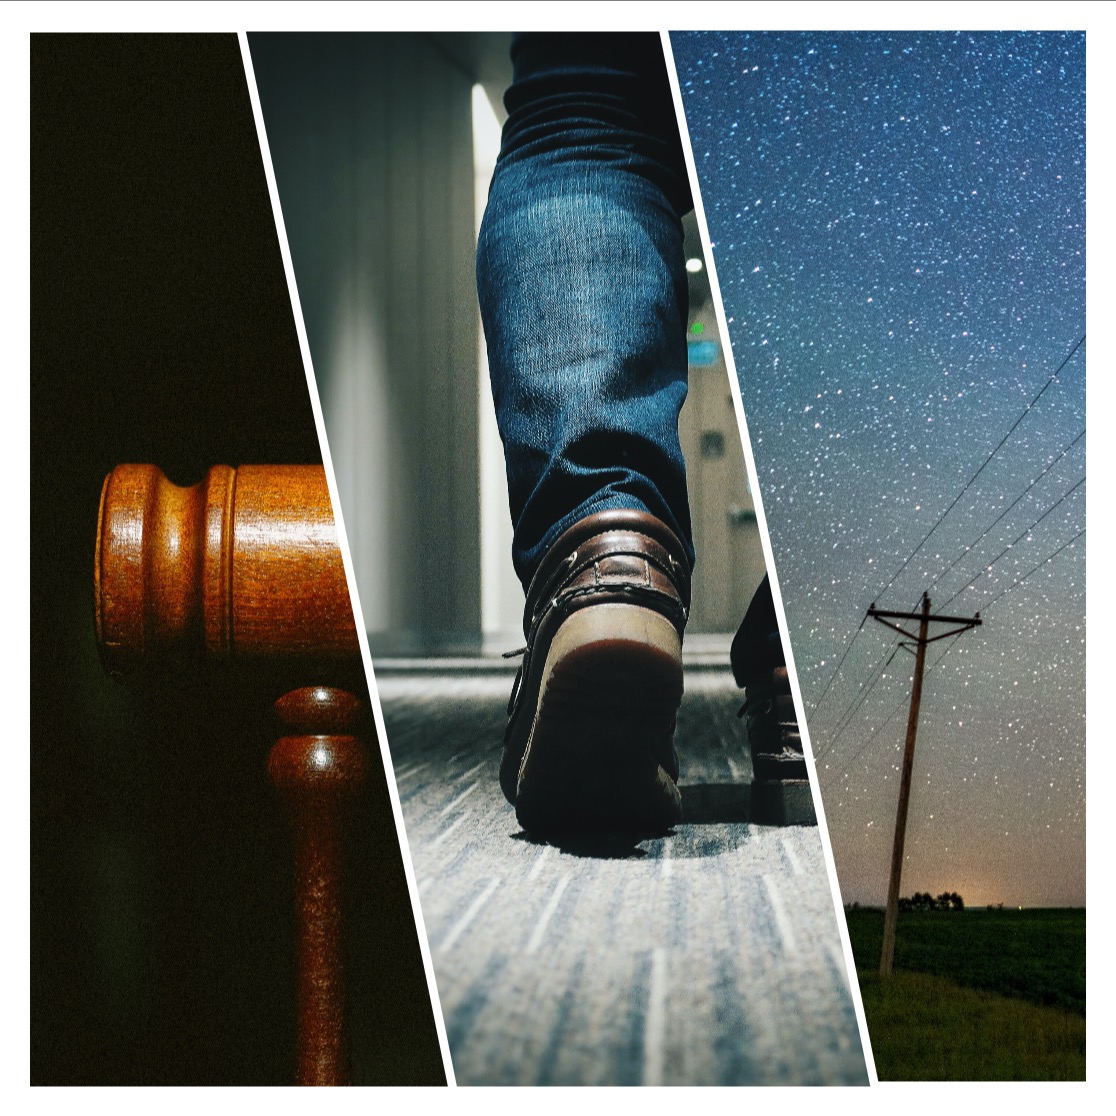 Three Images: Gavel, Man's Shoe Walking, Power Line Starry Night